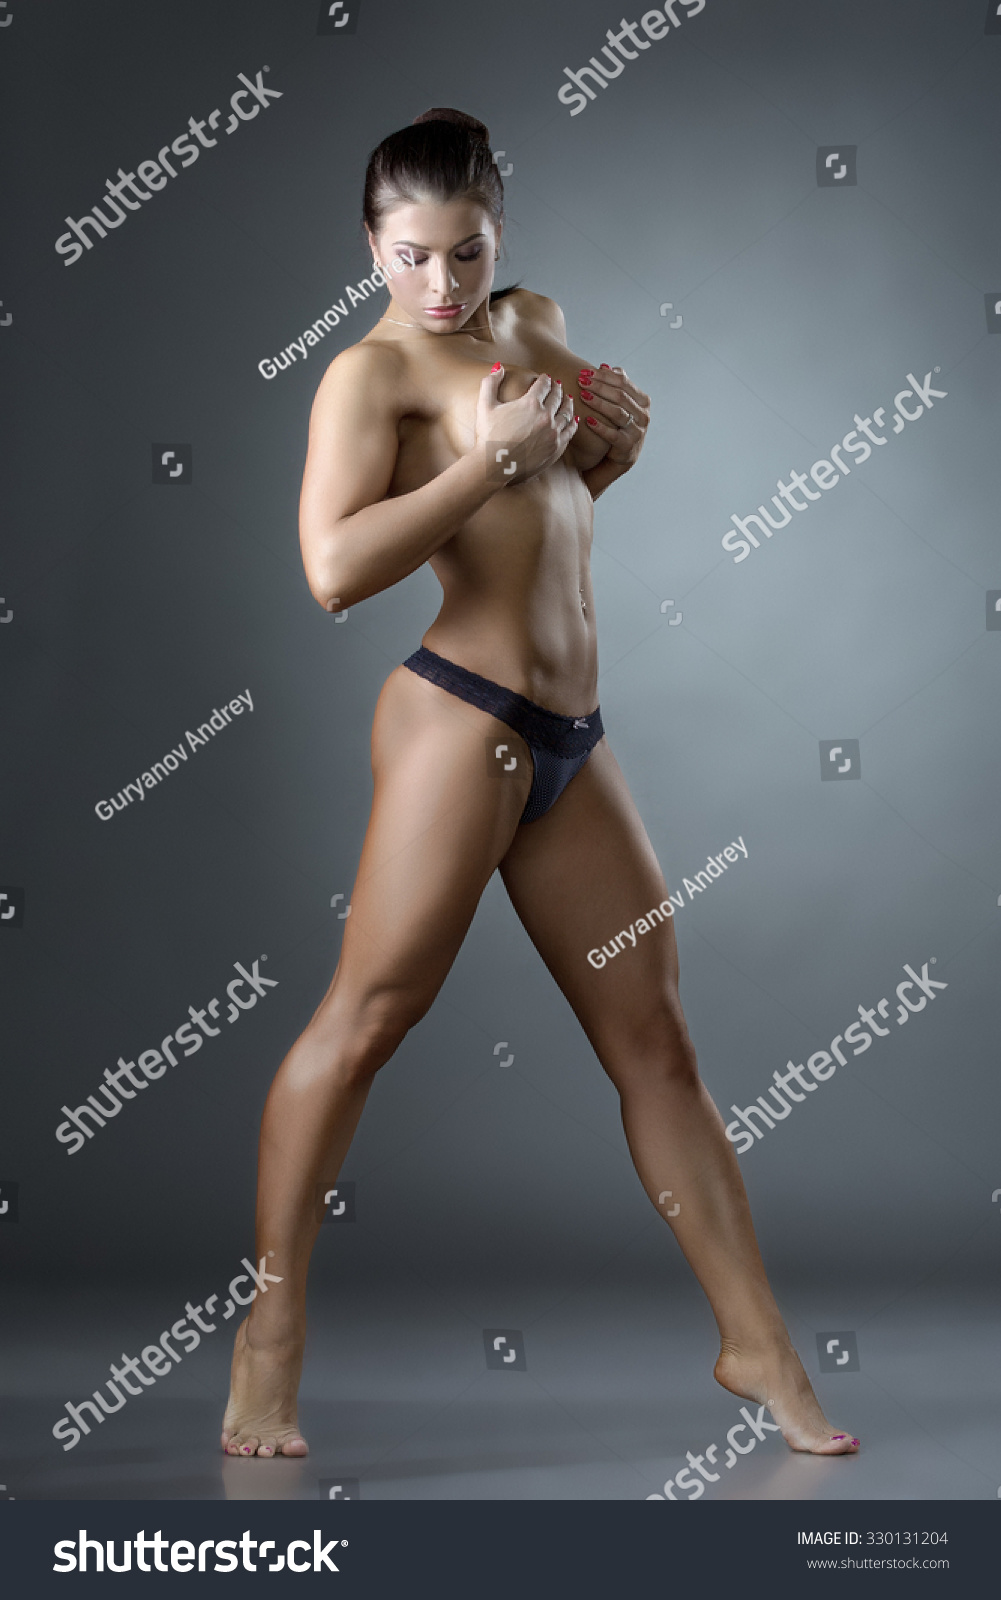 brendan kirwan recommends Female Athletes Posing Nude